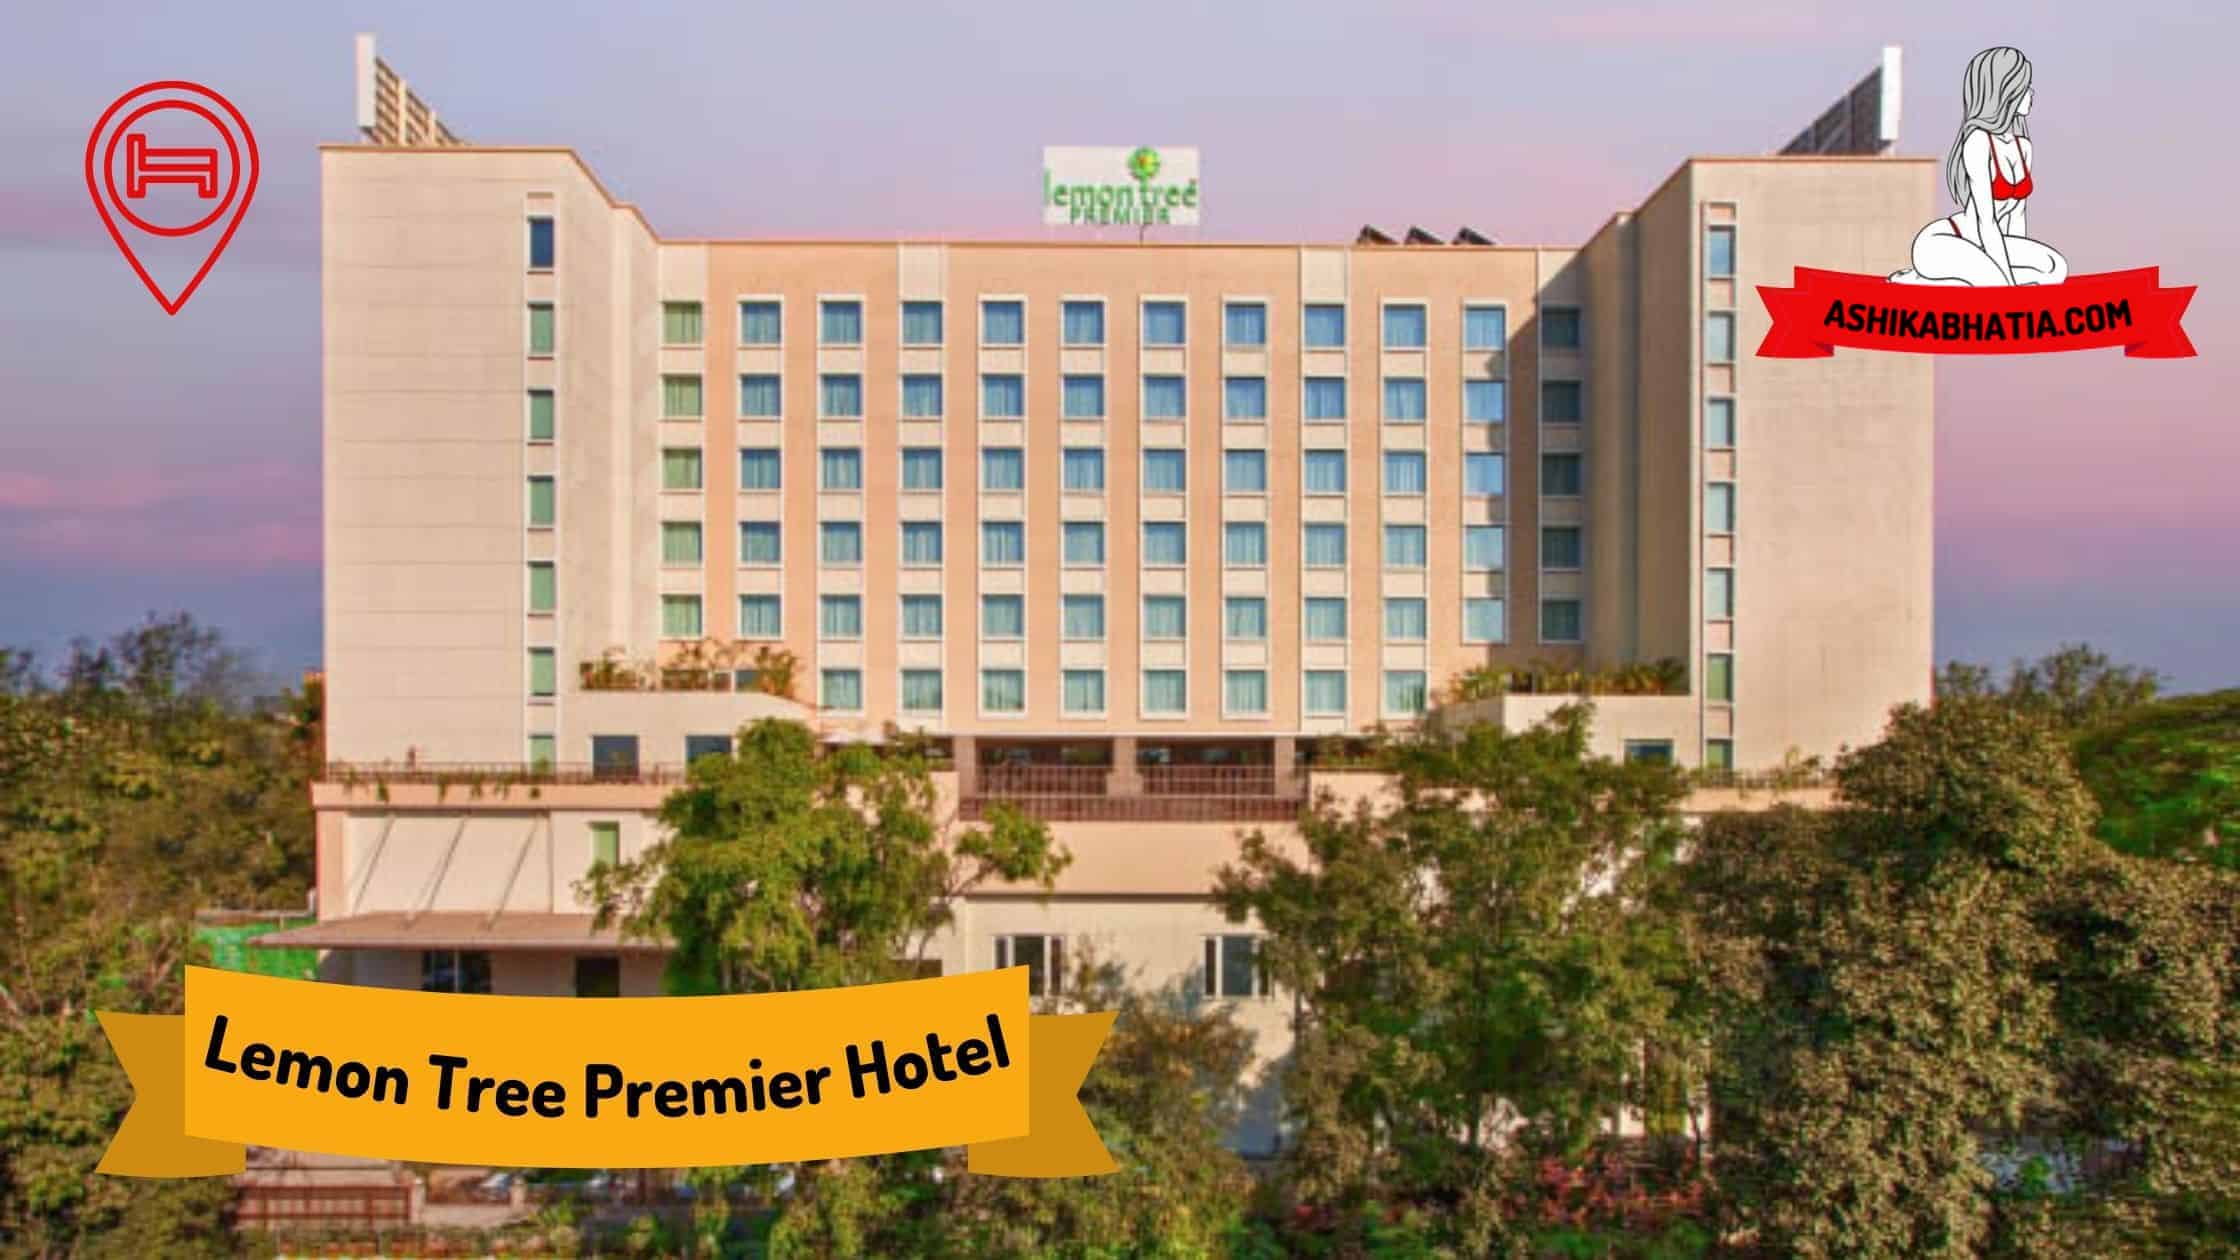 Lemon Tree Premier Hotel Escorts